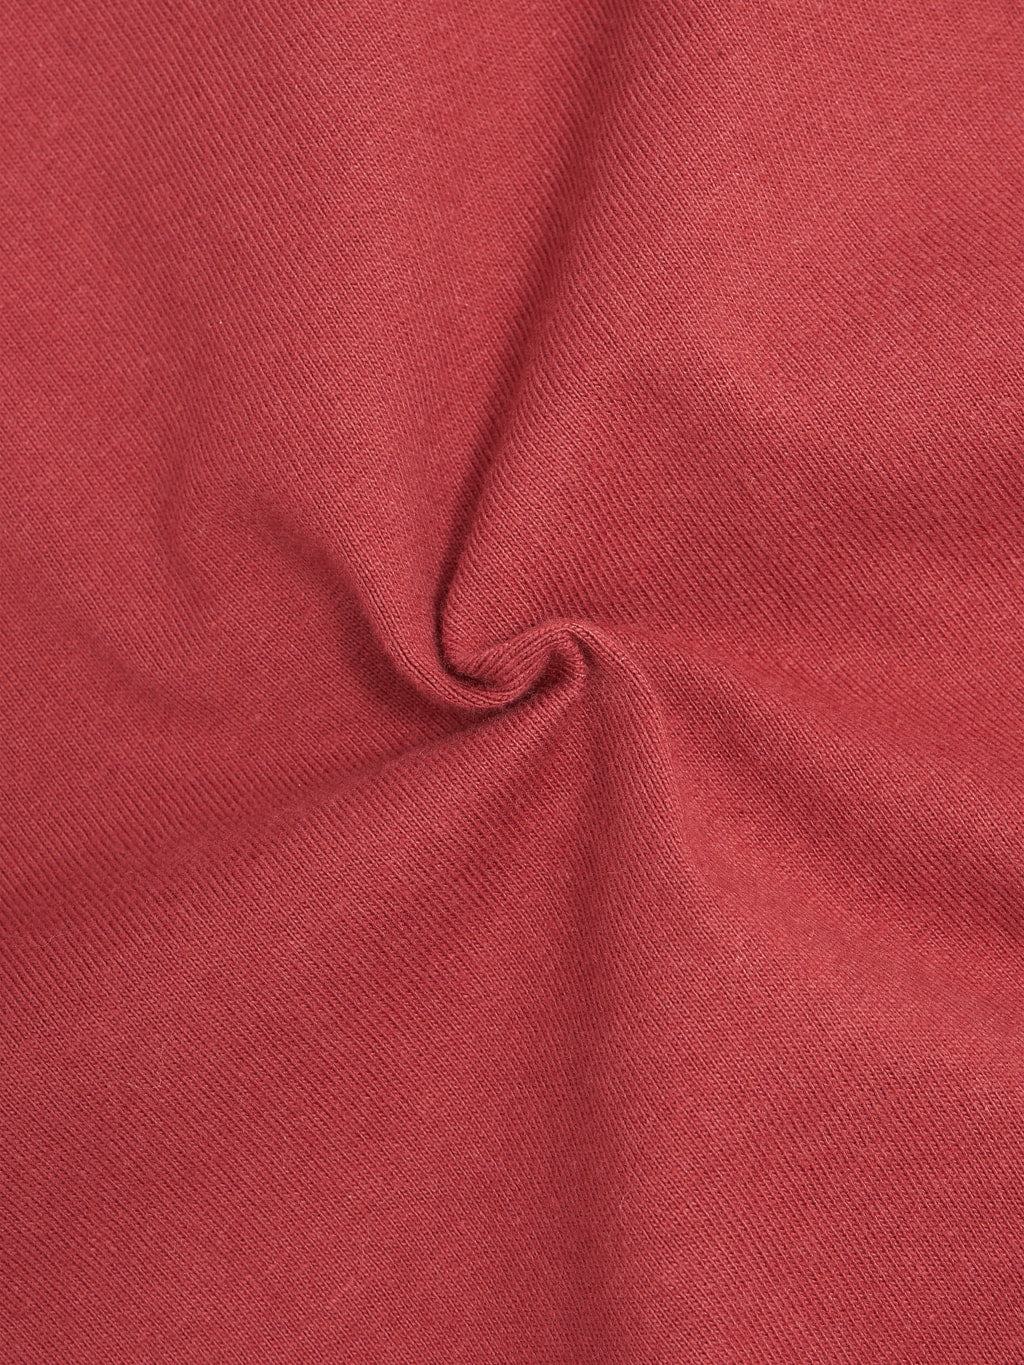 The Flat Head Loopwheeled Heavyweight Plain T-Shirt Light Red